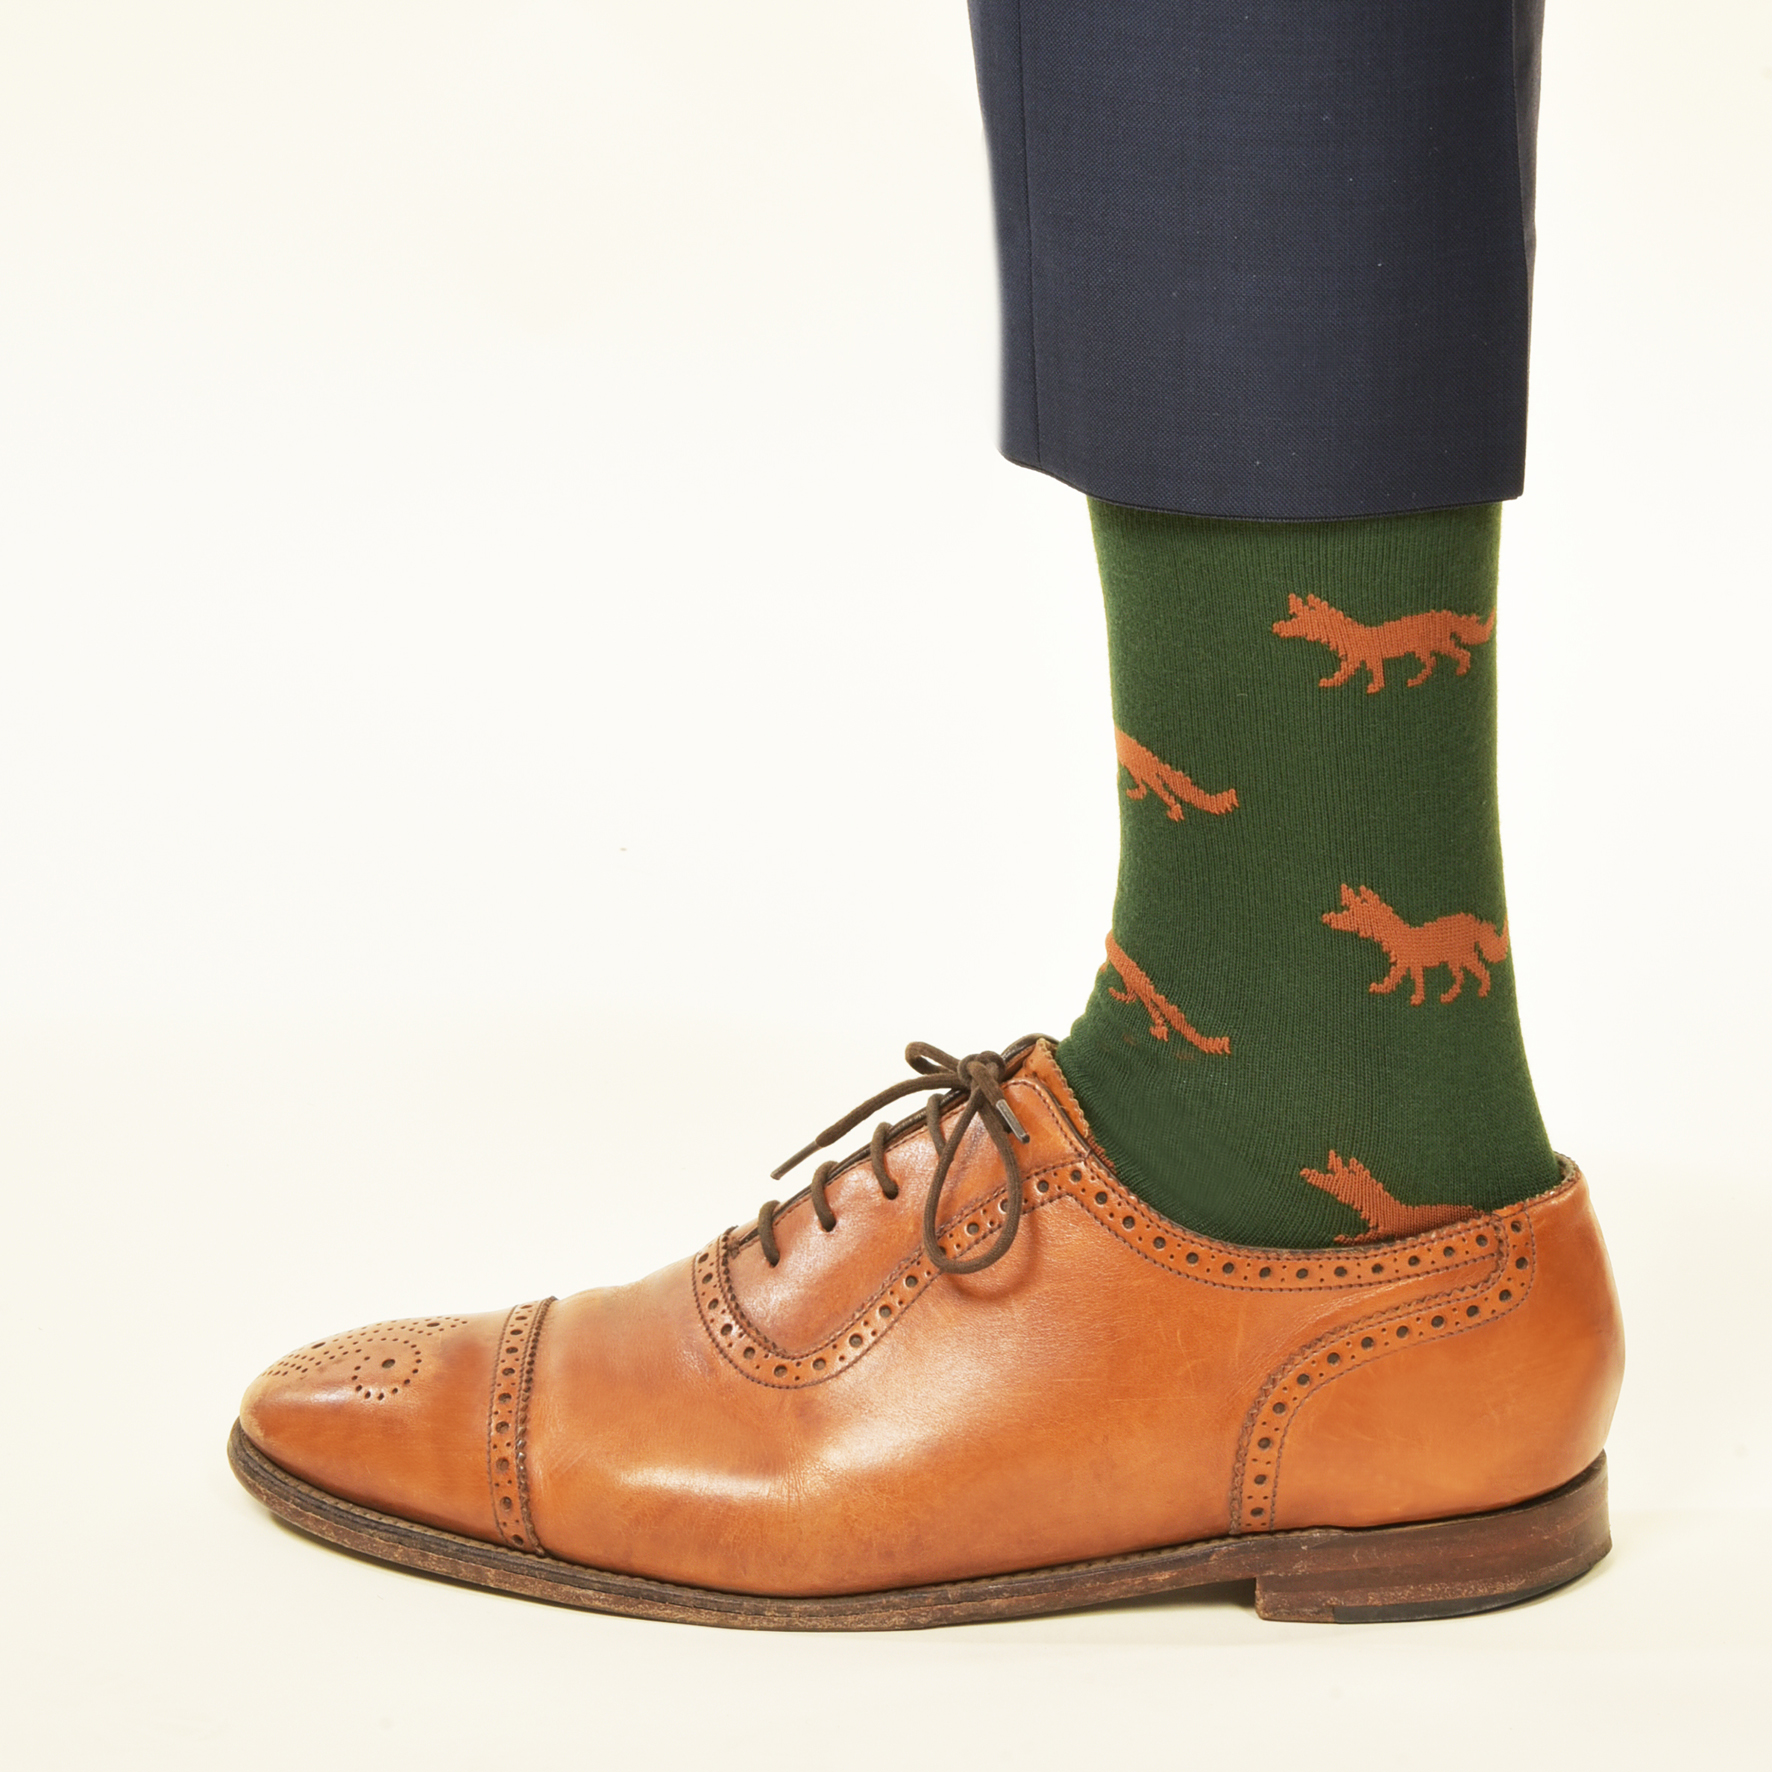 Fuchs-Socken (Grün) - Krawattendackel